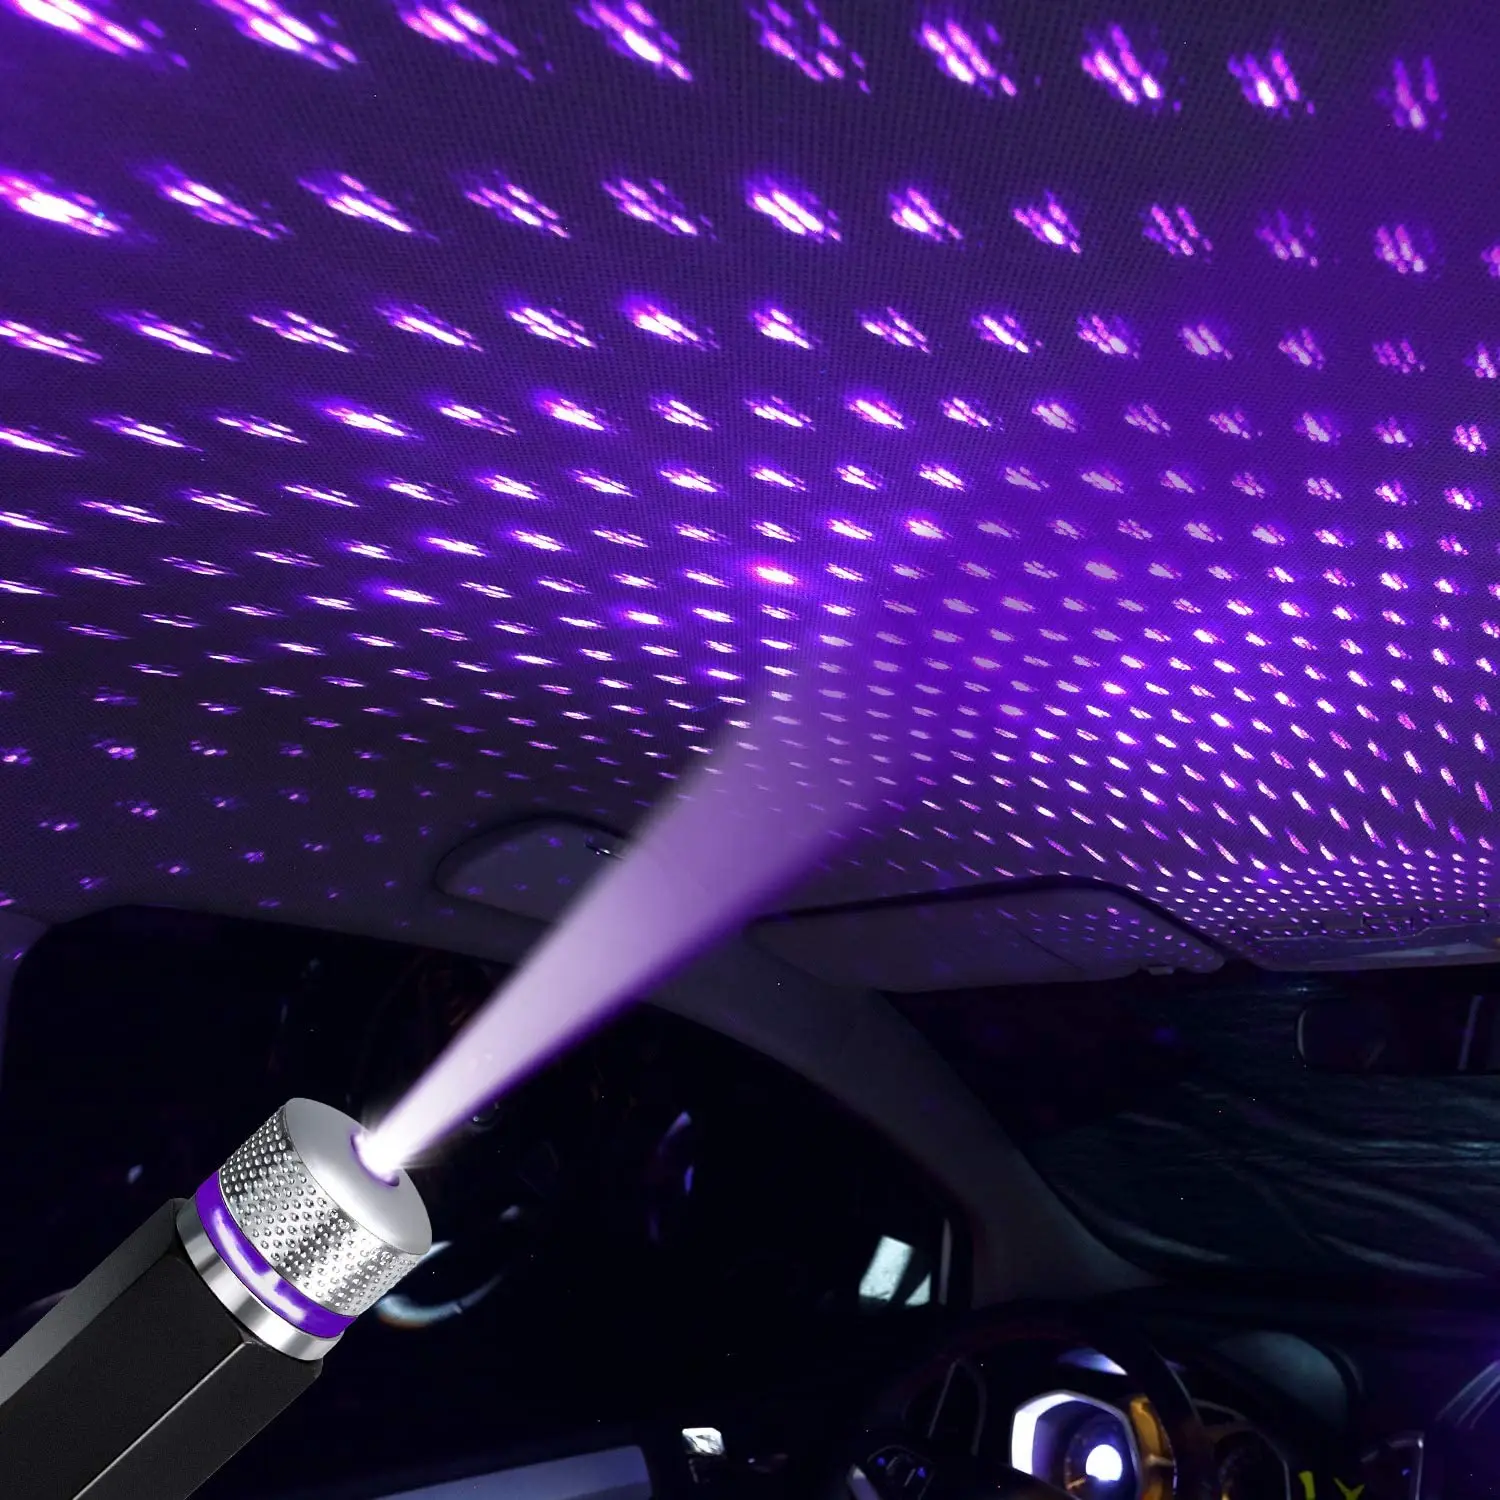 USB Auto-Atmosphäre Lampe Tragbar Auto-Umgebungs licht Auto-Innen